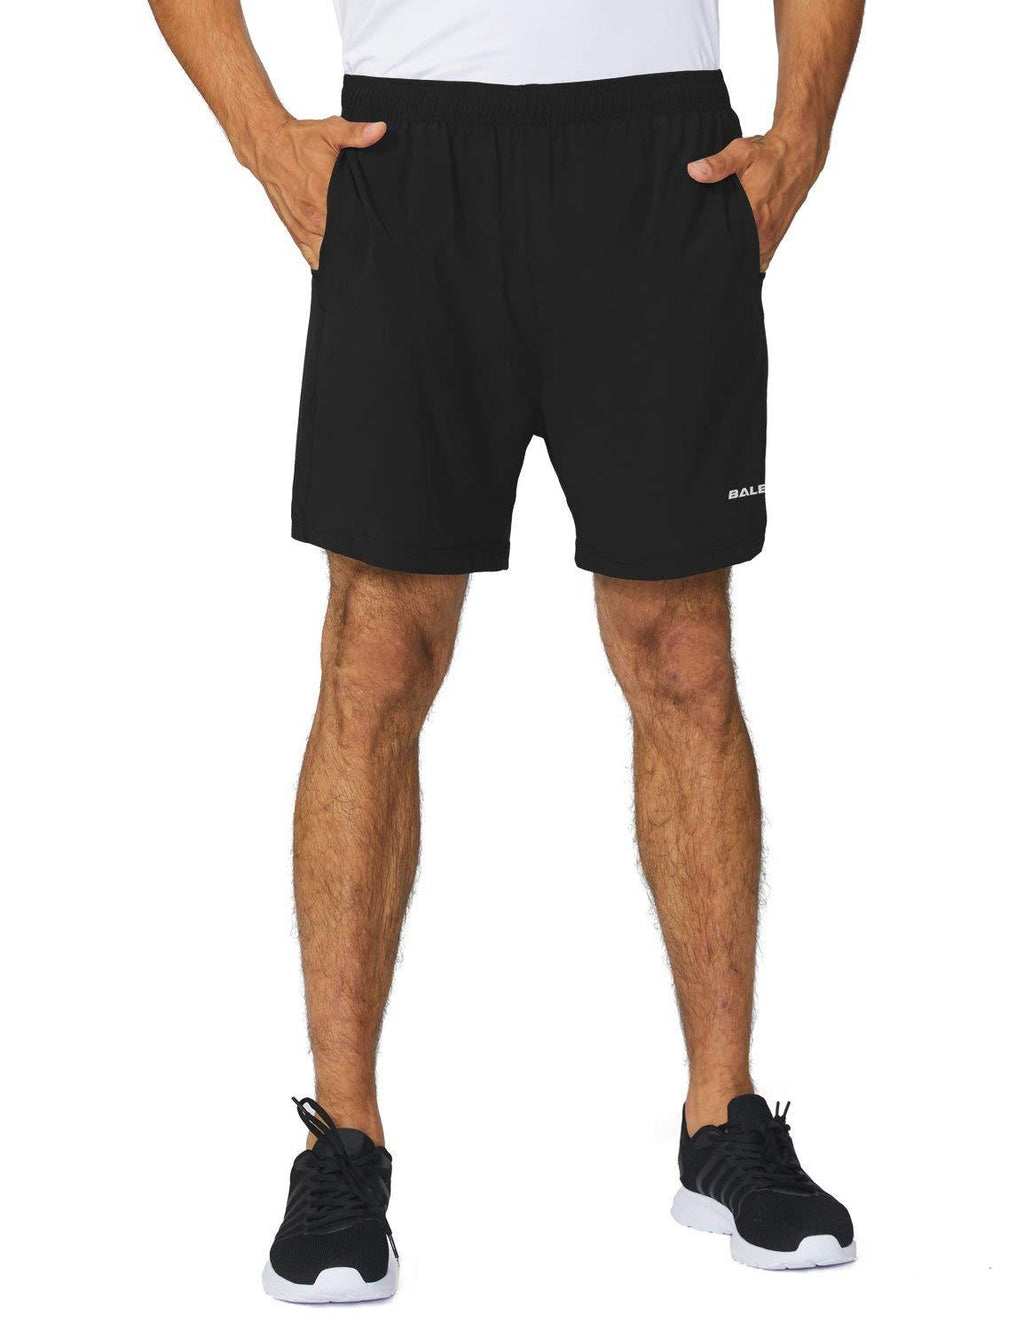 [AUSTRALIA] - BALEAF Men's 5 Inches Running Athletic Shorts Zipper Pocket A01- Black Large 